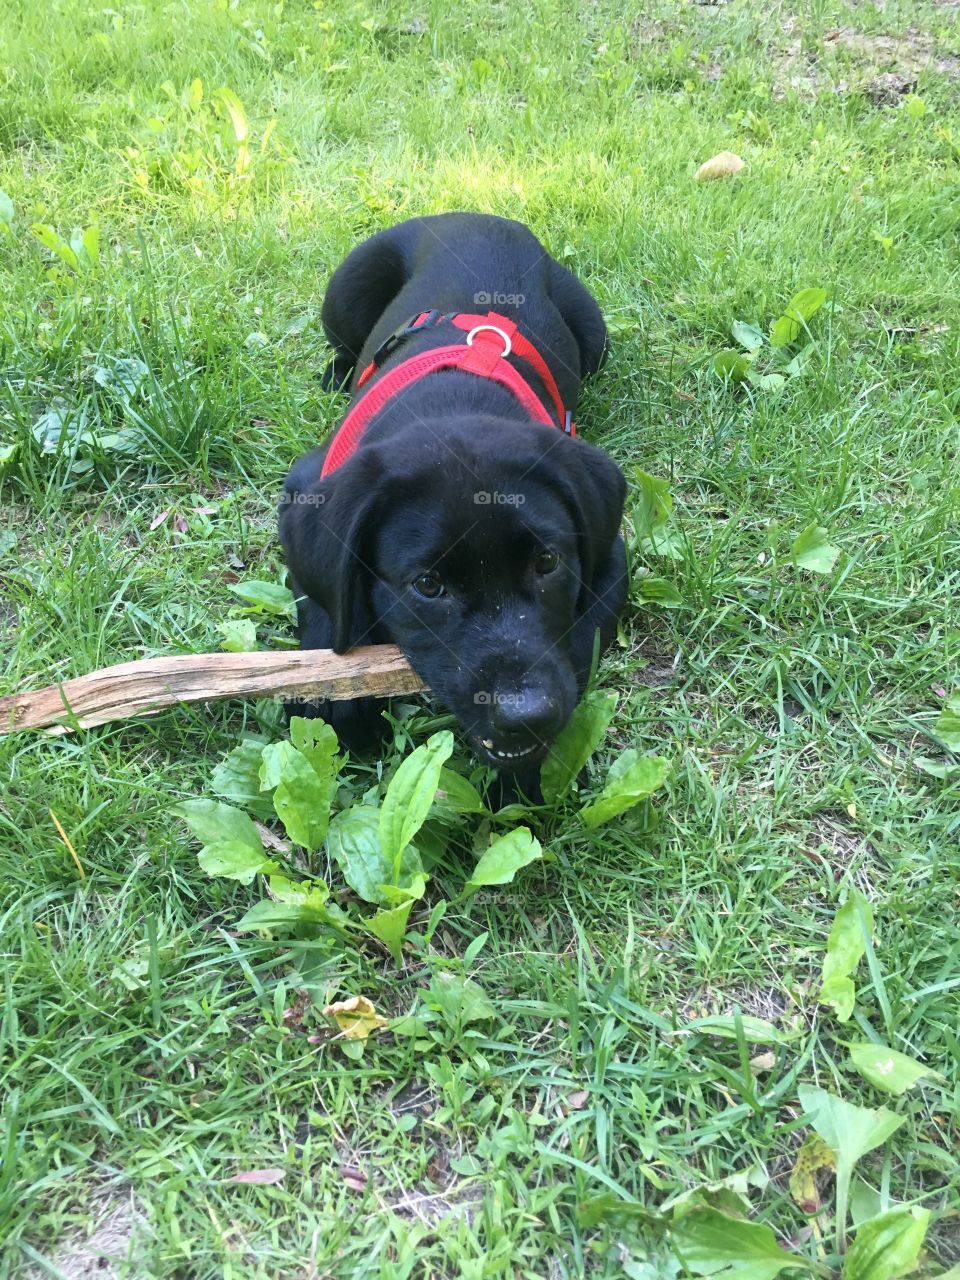 Mmmm tasty stick for a cute puppy 